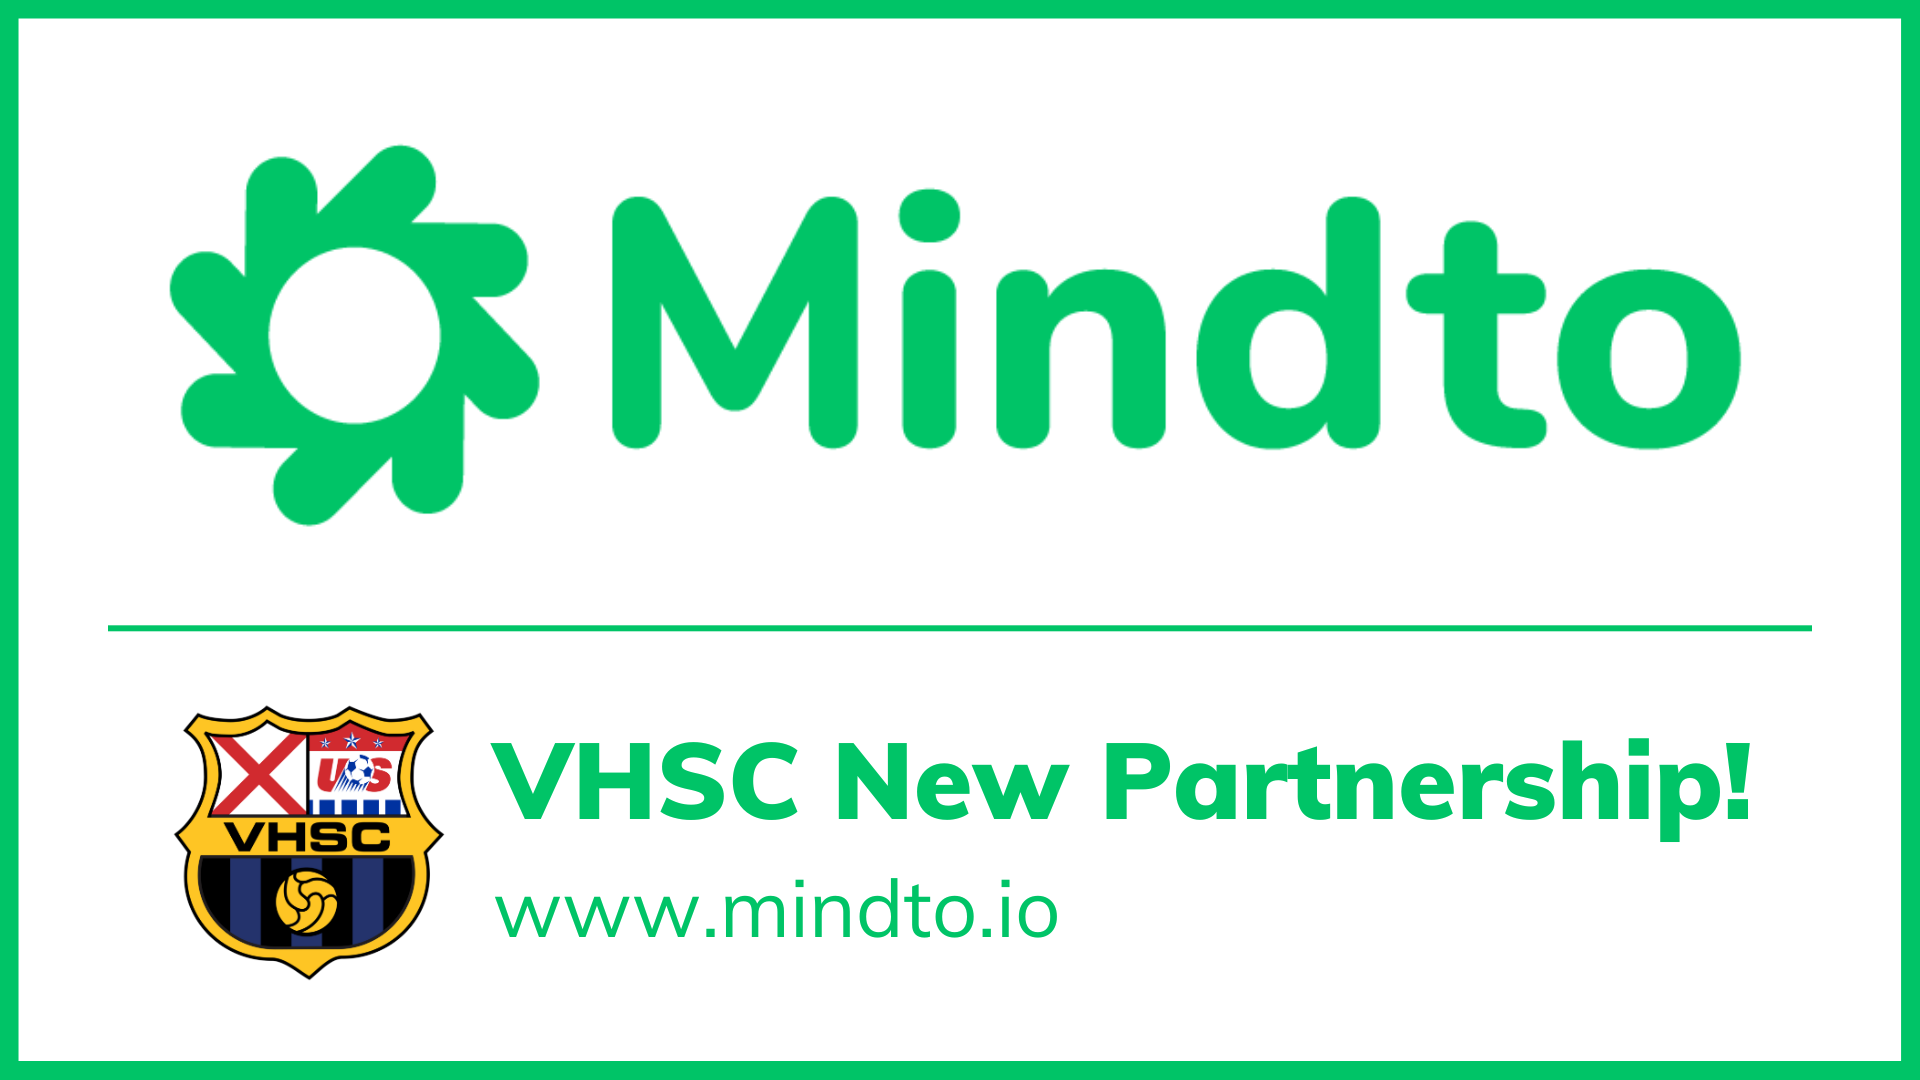 1920x1080 Mindto VHSC Partnership